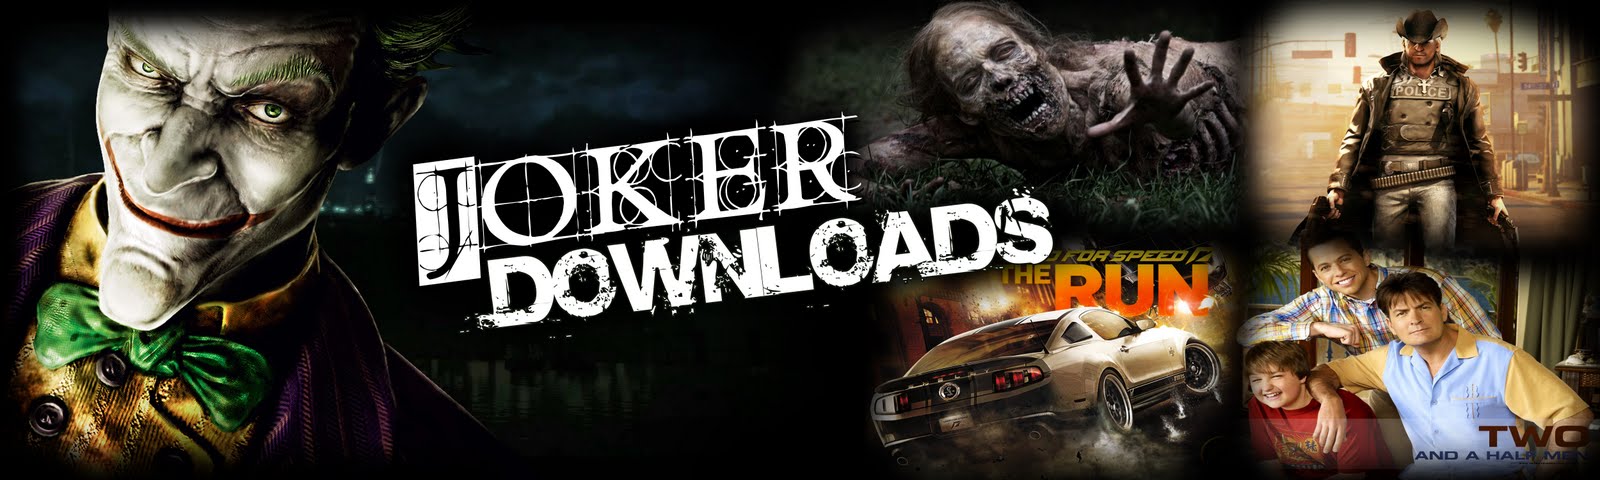 Joker Downloads